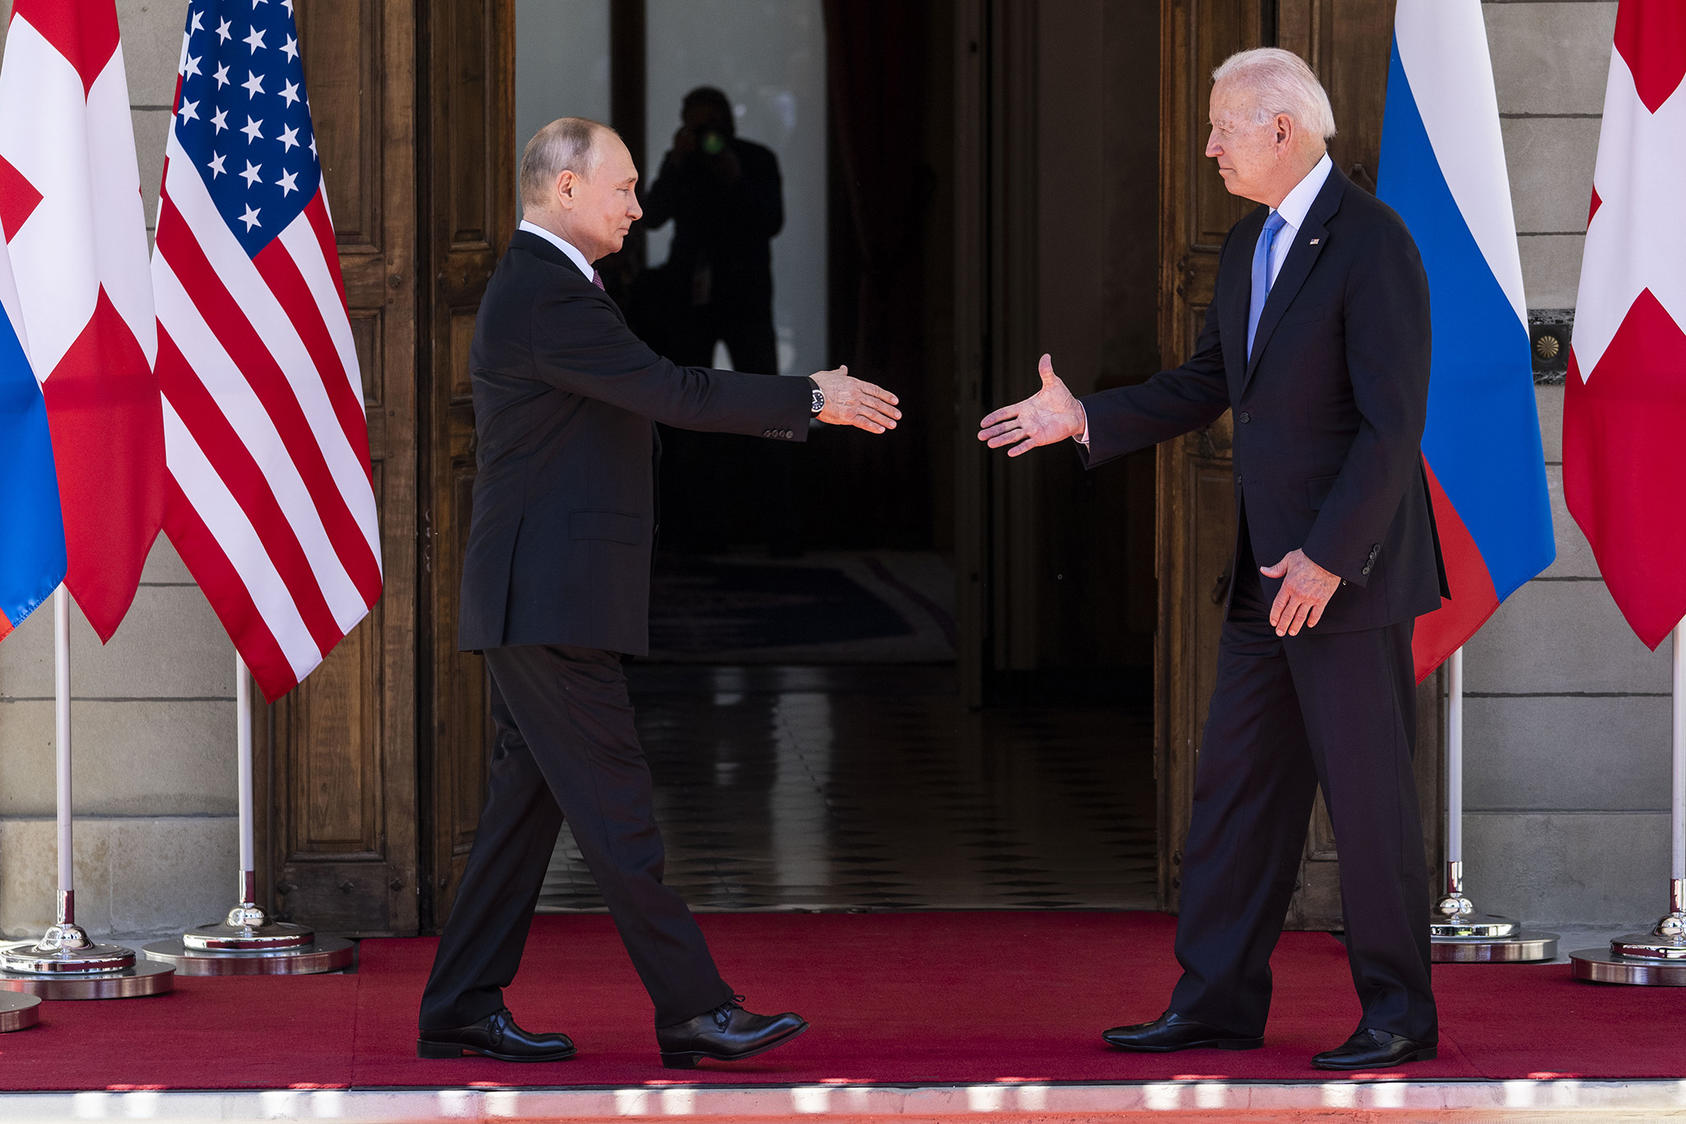 President Joe Biden and Russian President Vladimir Putin shake their hands before their first meeting at the Villa La Grange in Geneva, Switzerland, June 16, 2021. (Doug Mills/The New York Times)